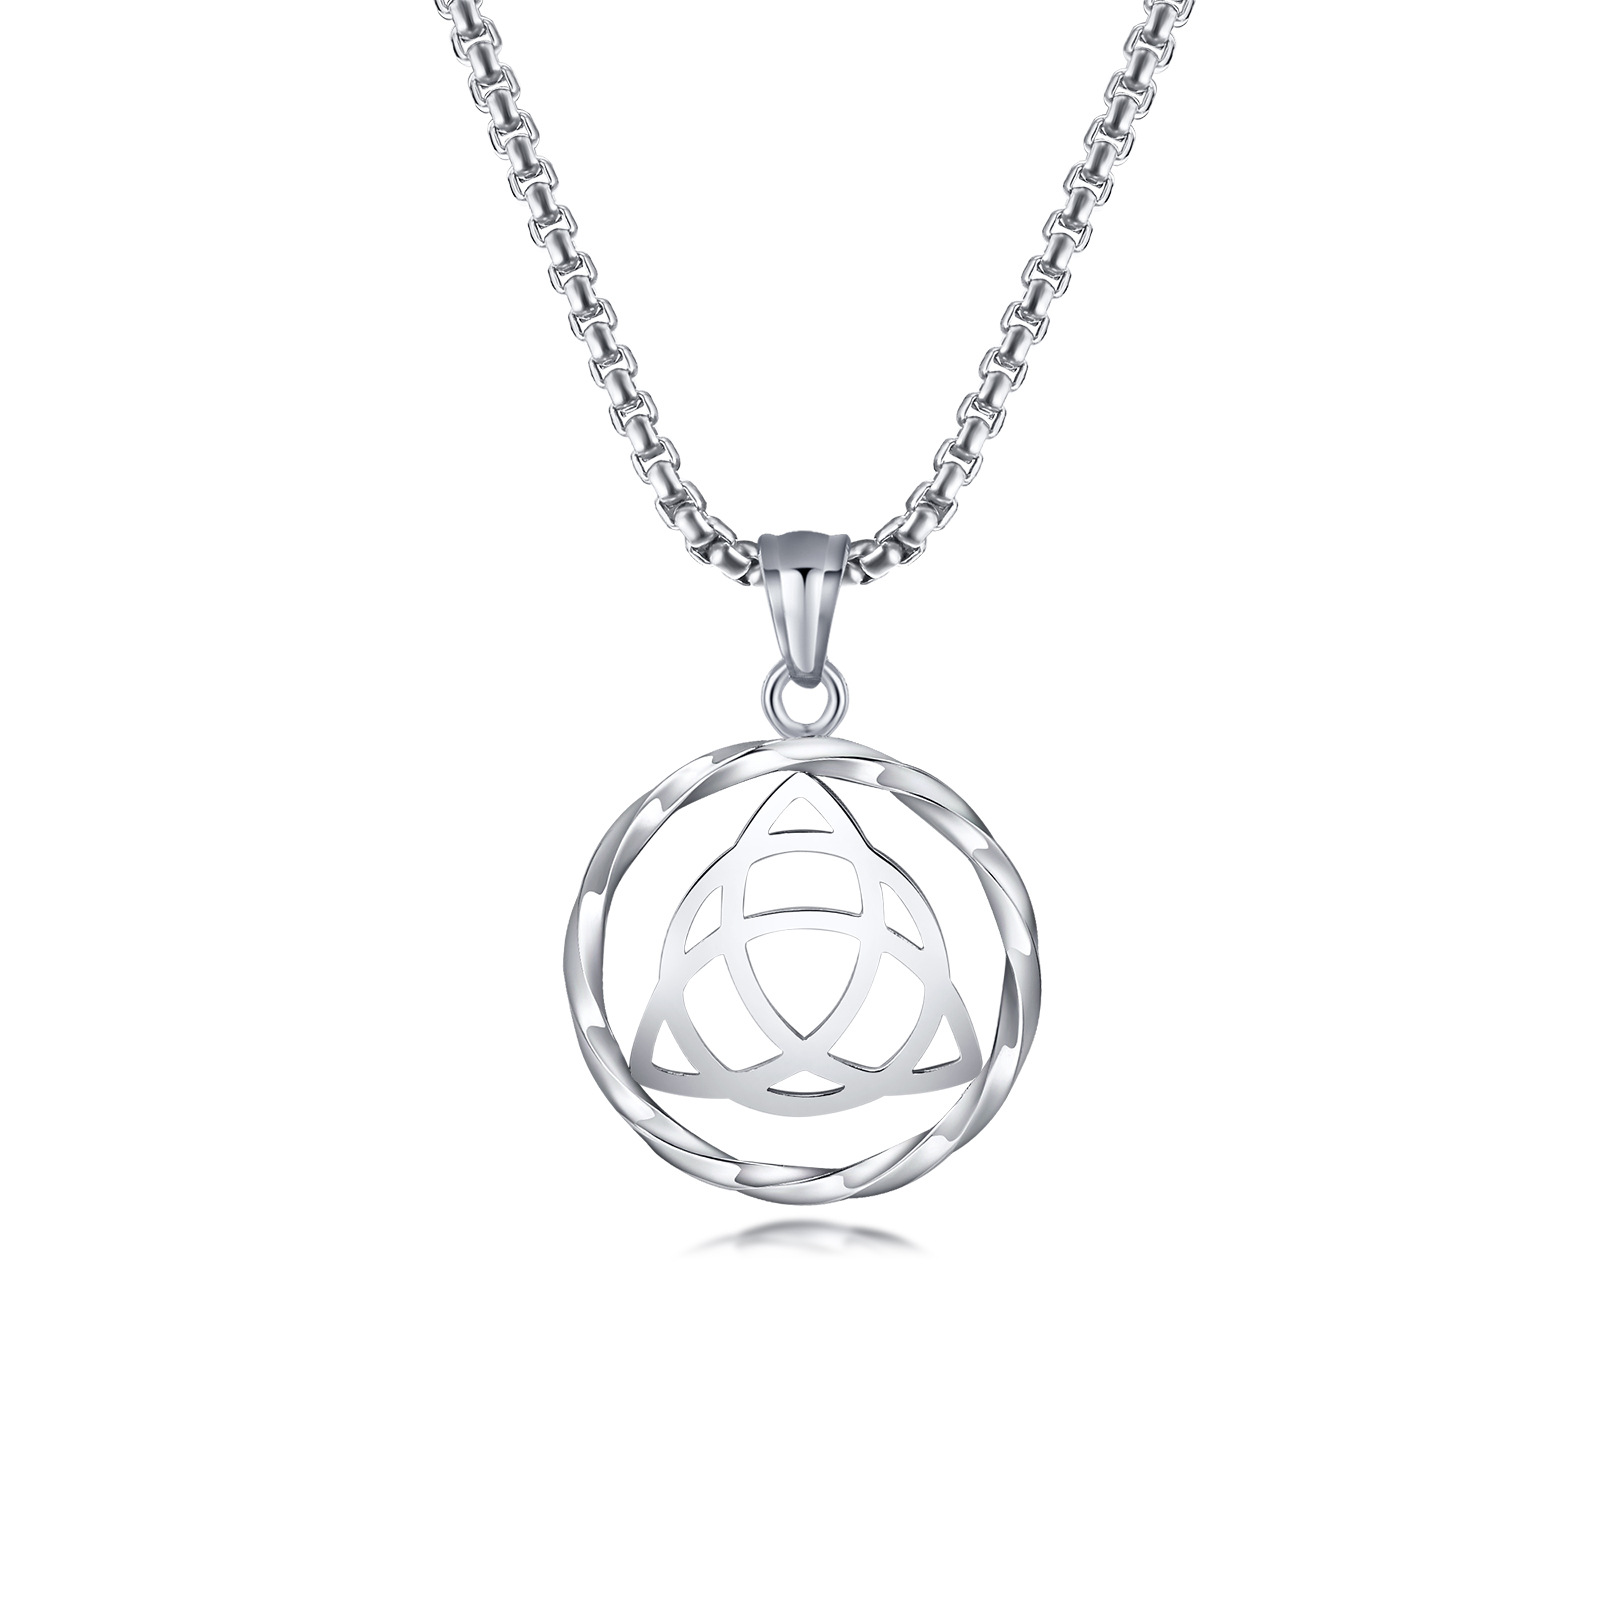 4:Celtic symbol pendant with chain